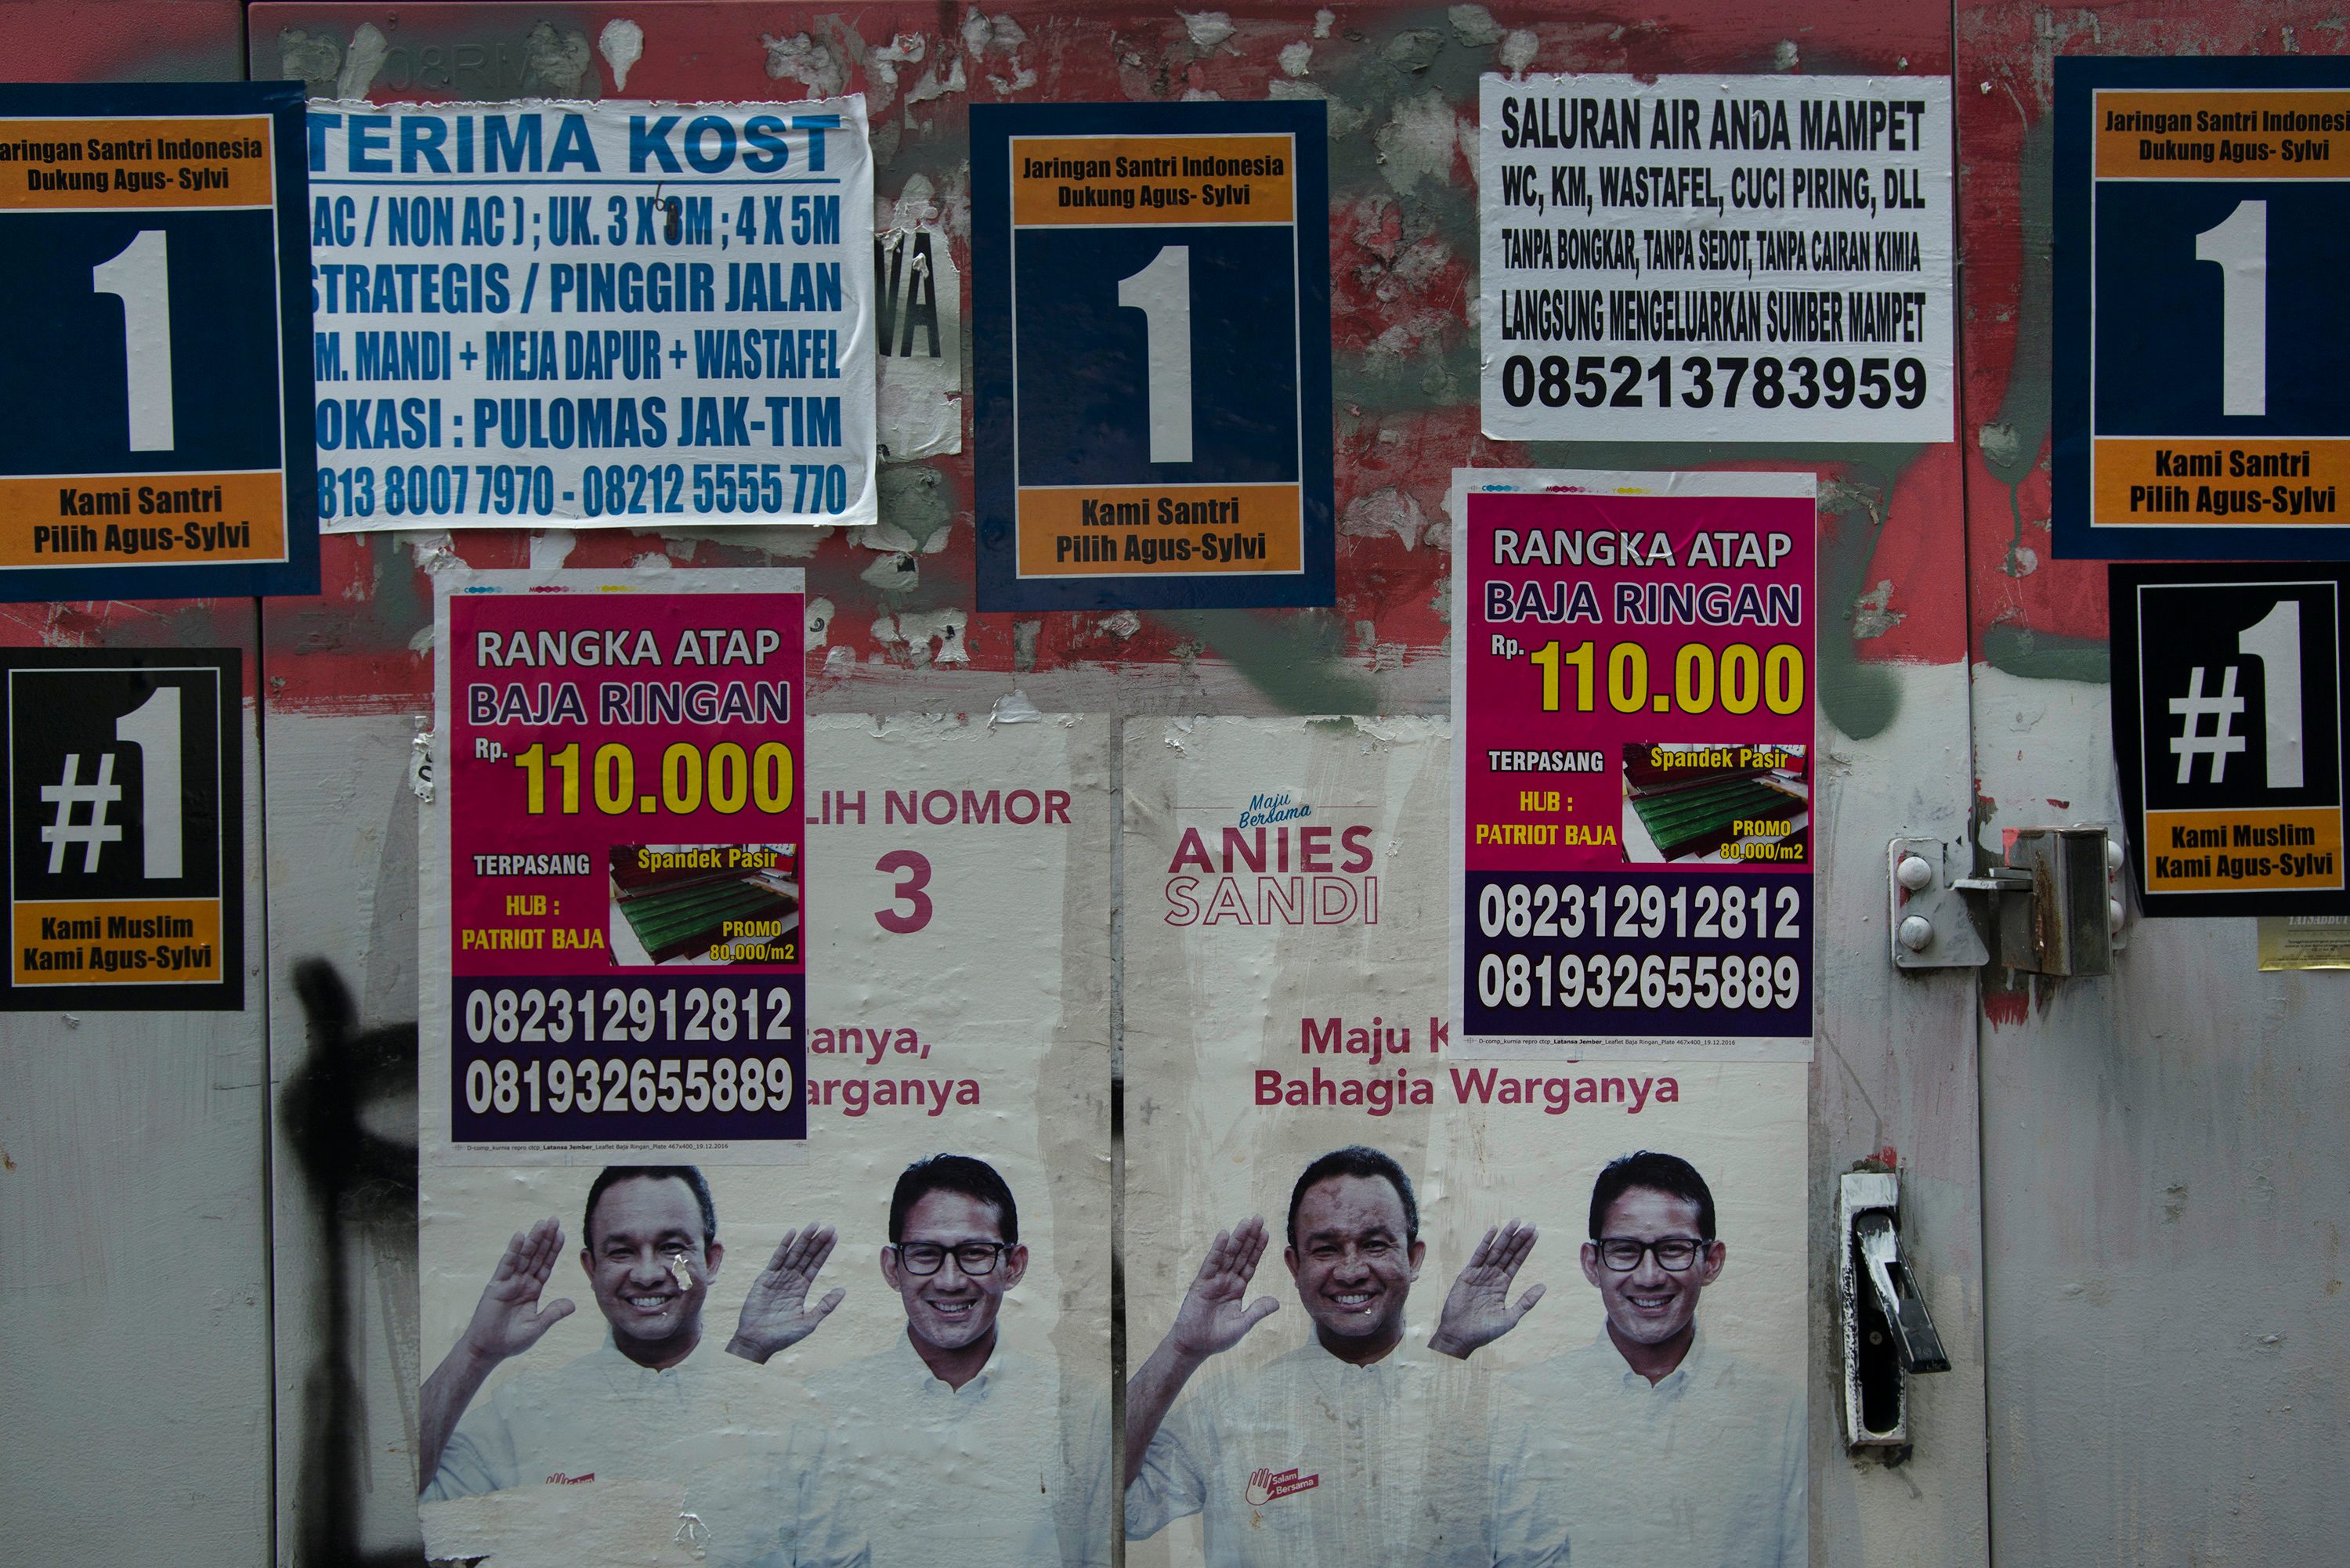 Sejumlah atribut kampanye cagub dan cawagub DKI Jakarta masih terpasang di ruang publik pada hari pertama minggu tenang kampanye, pada 12 Februari 2017. Foto oleh Rosa Panggabean/Antara 